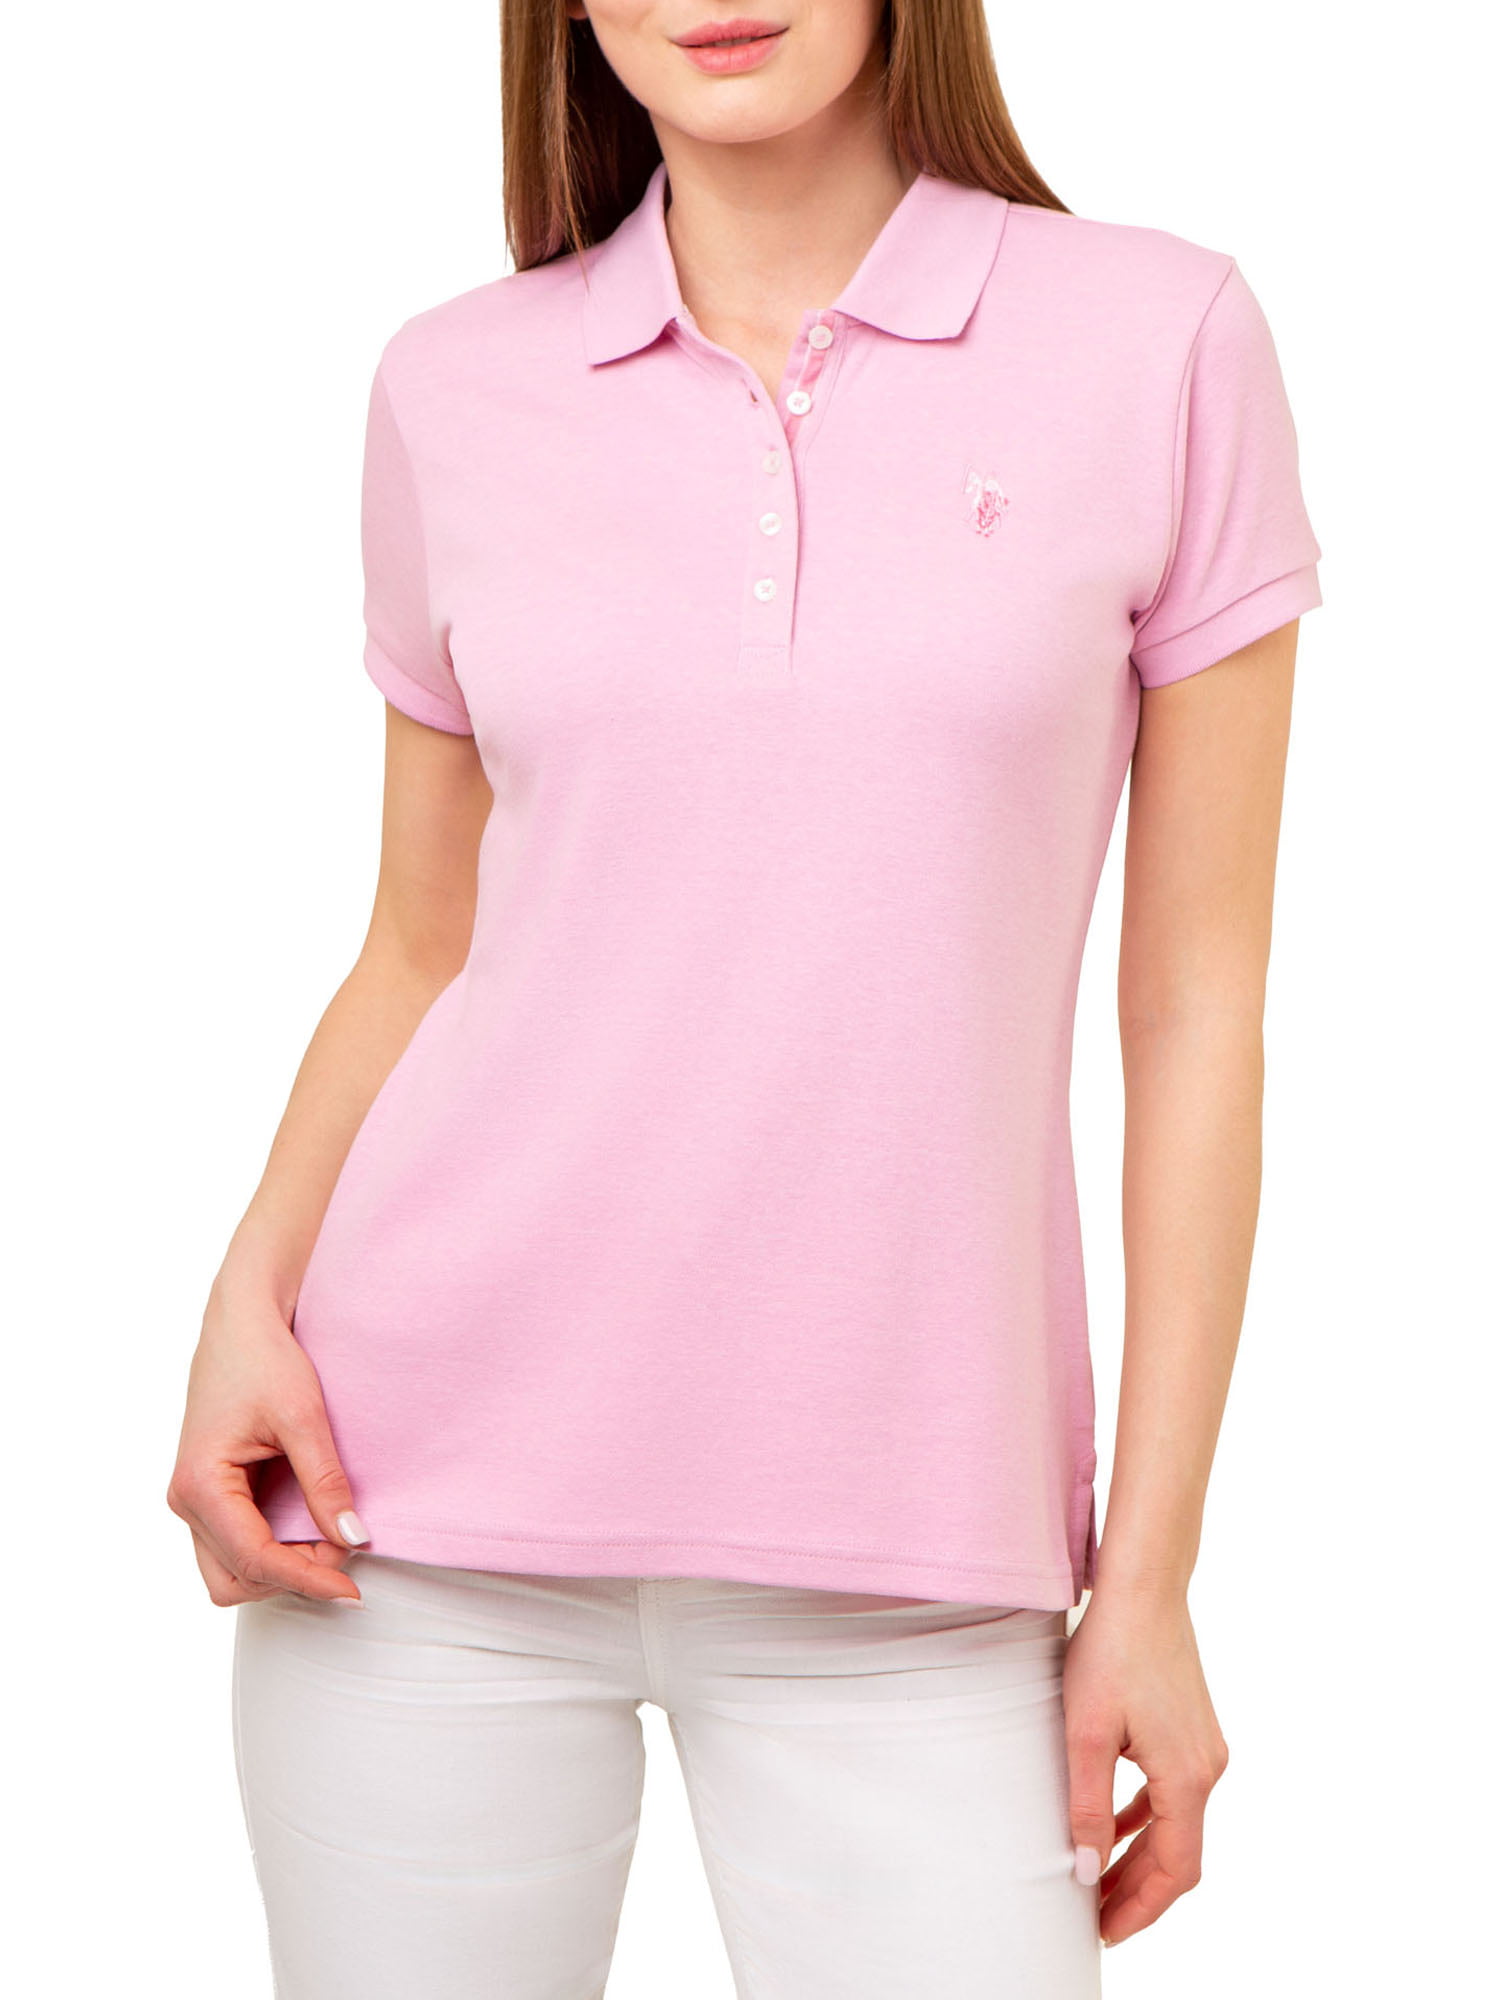 U.S. Polo Assn. Women's Interlock Heather Polo Shirt - Walmart.com